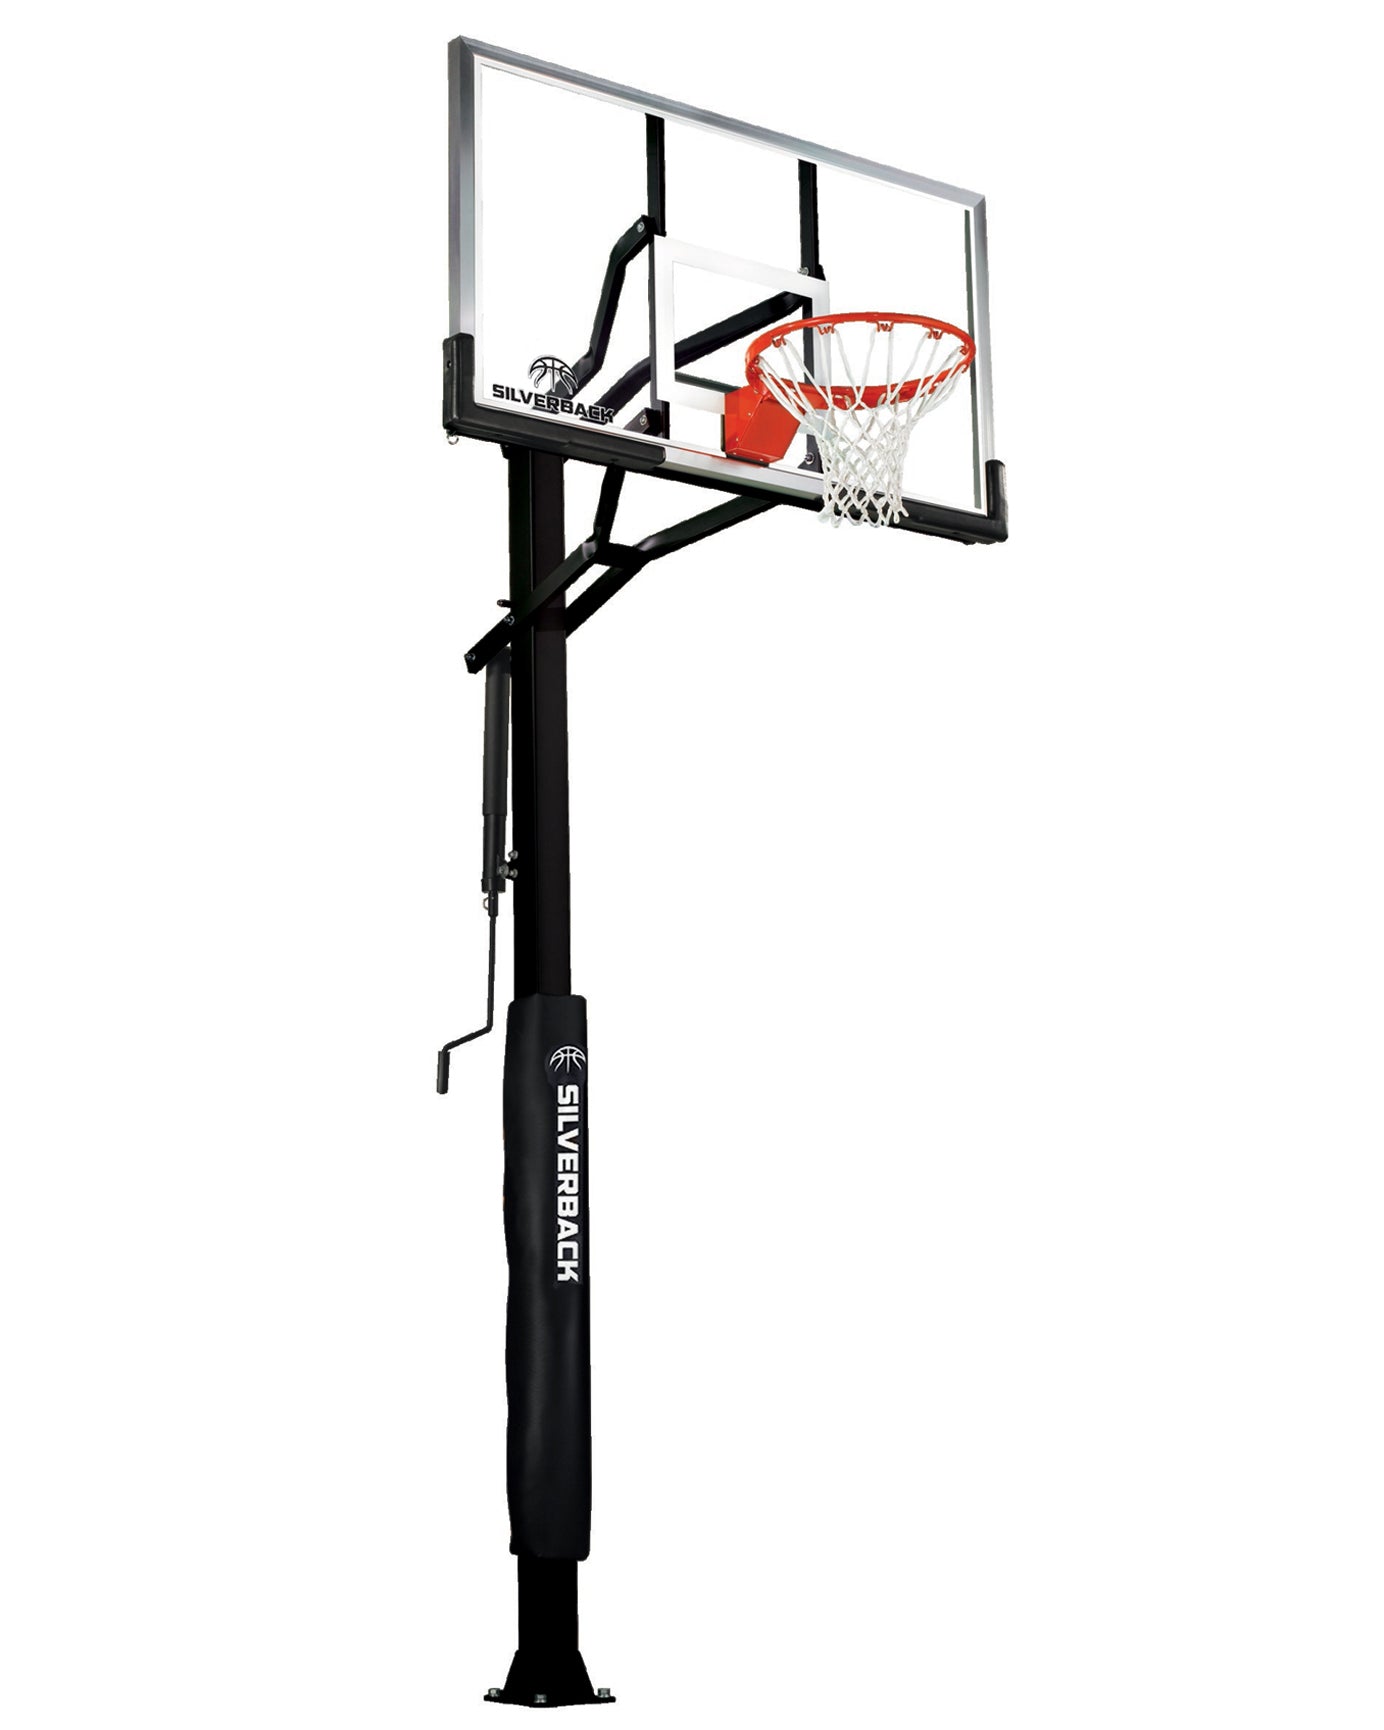 Silverback Mini Basketball Hoop Set & Reviews